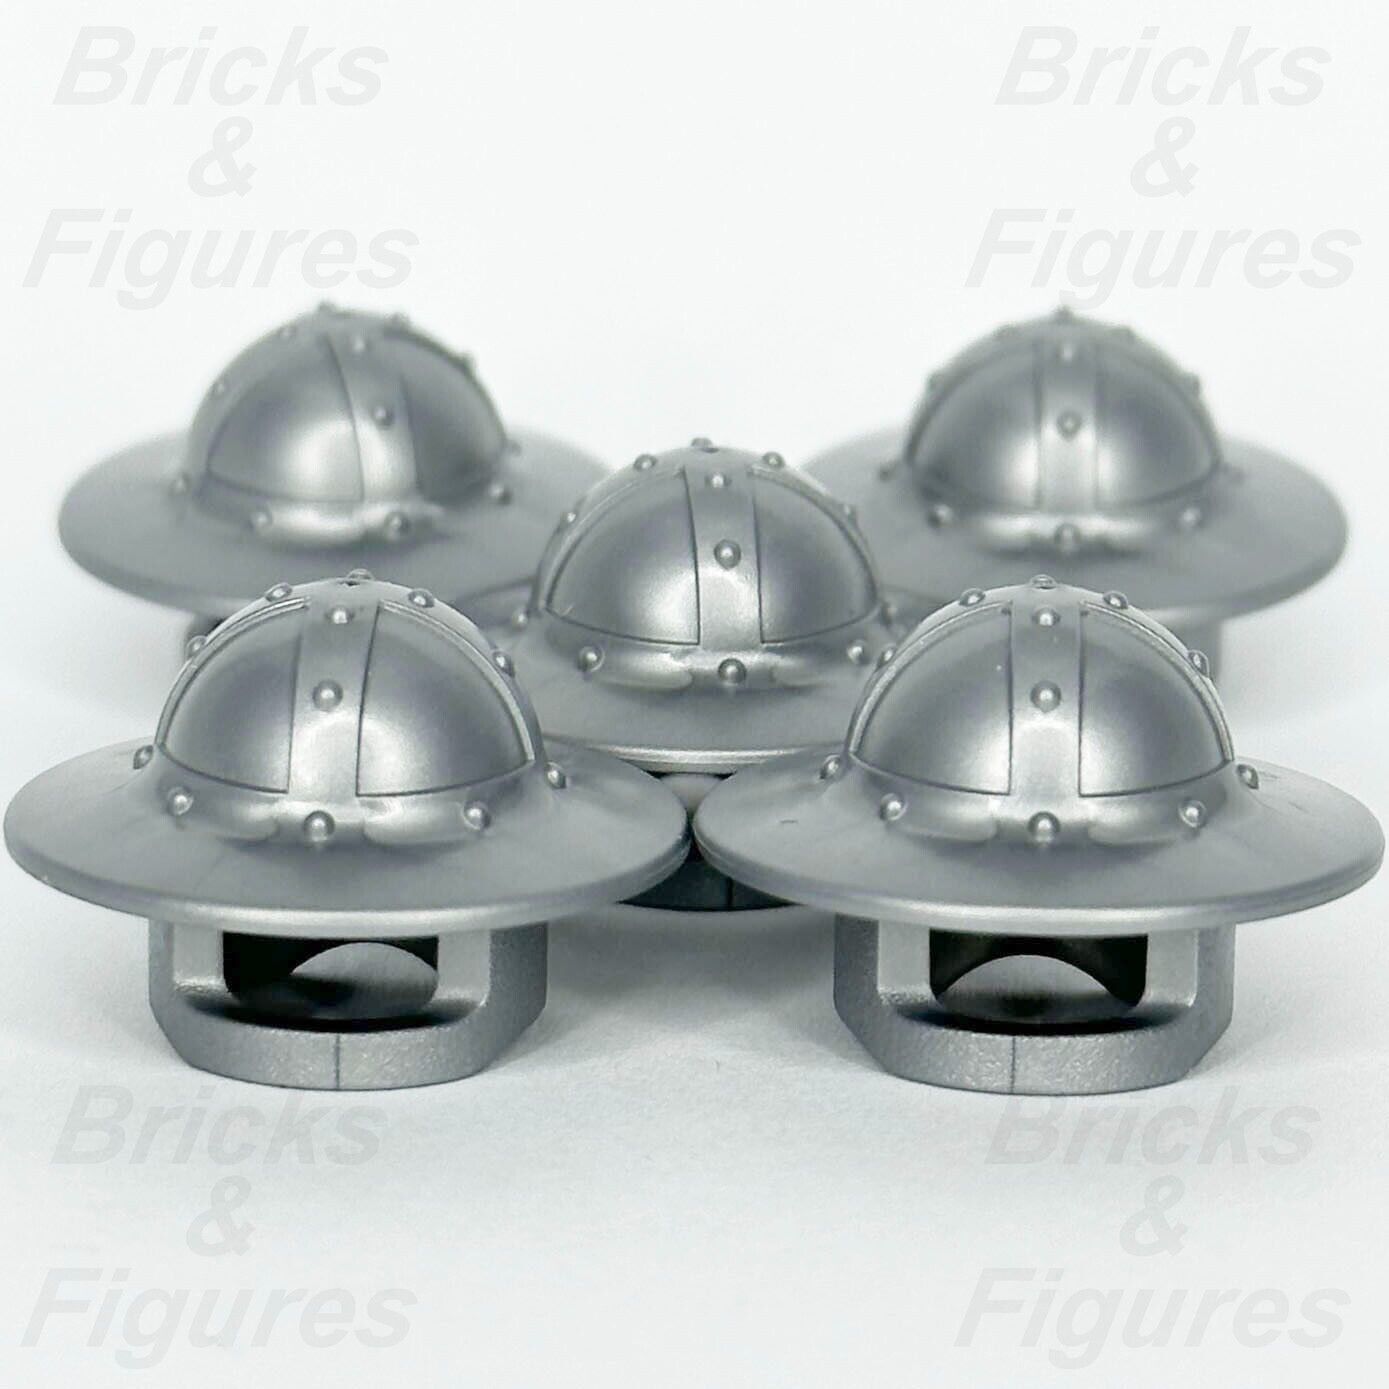 LEGO Castle Knight Chin Guard & Broad Brim Helmet Minifigure Part 30273 x 5 - Bricks & Figures